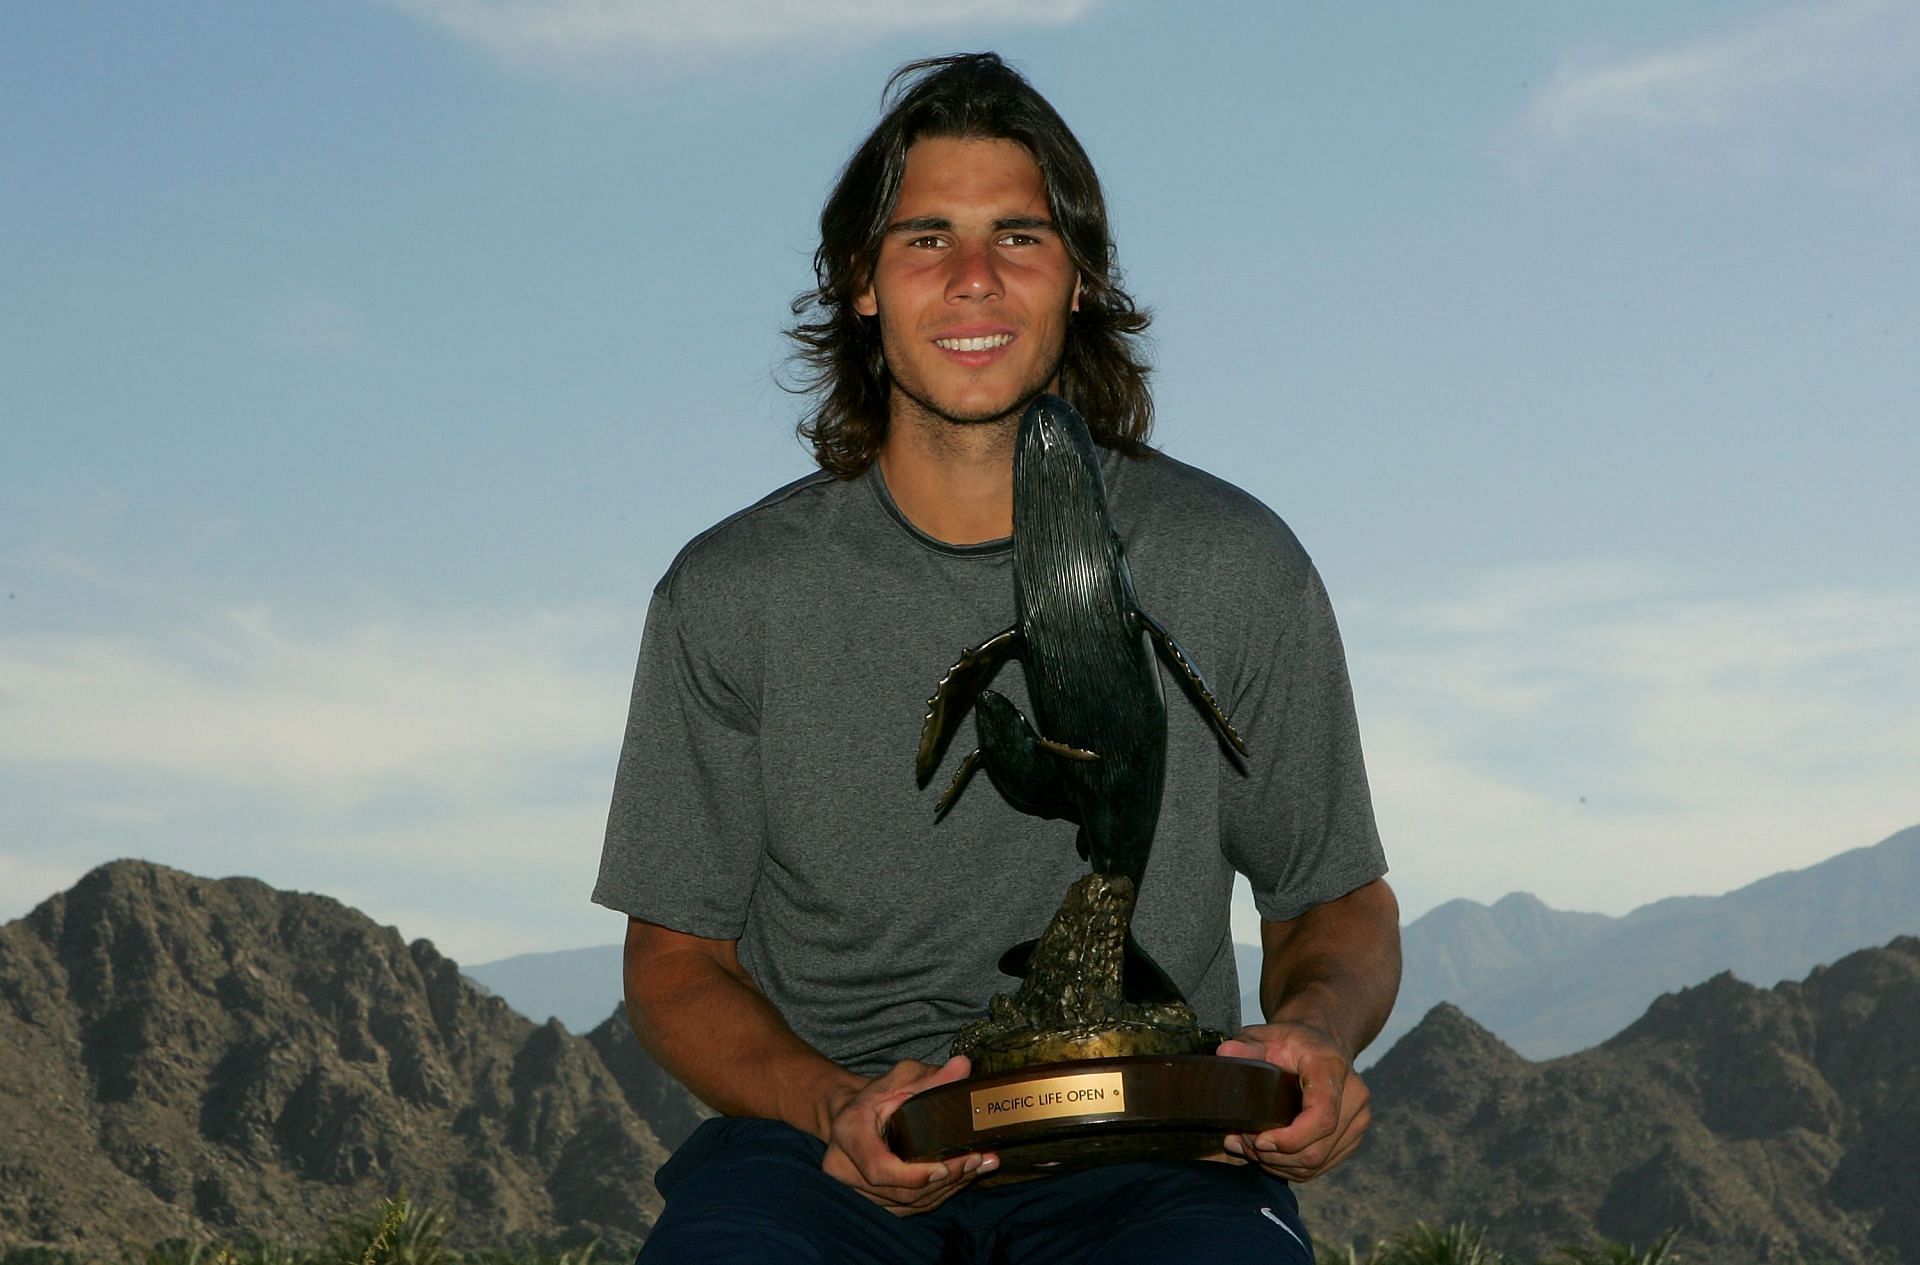 Rafael Nadal won the 2007 Pacific Life Open